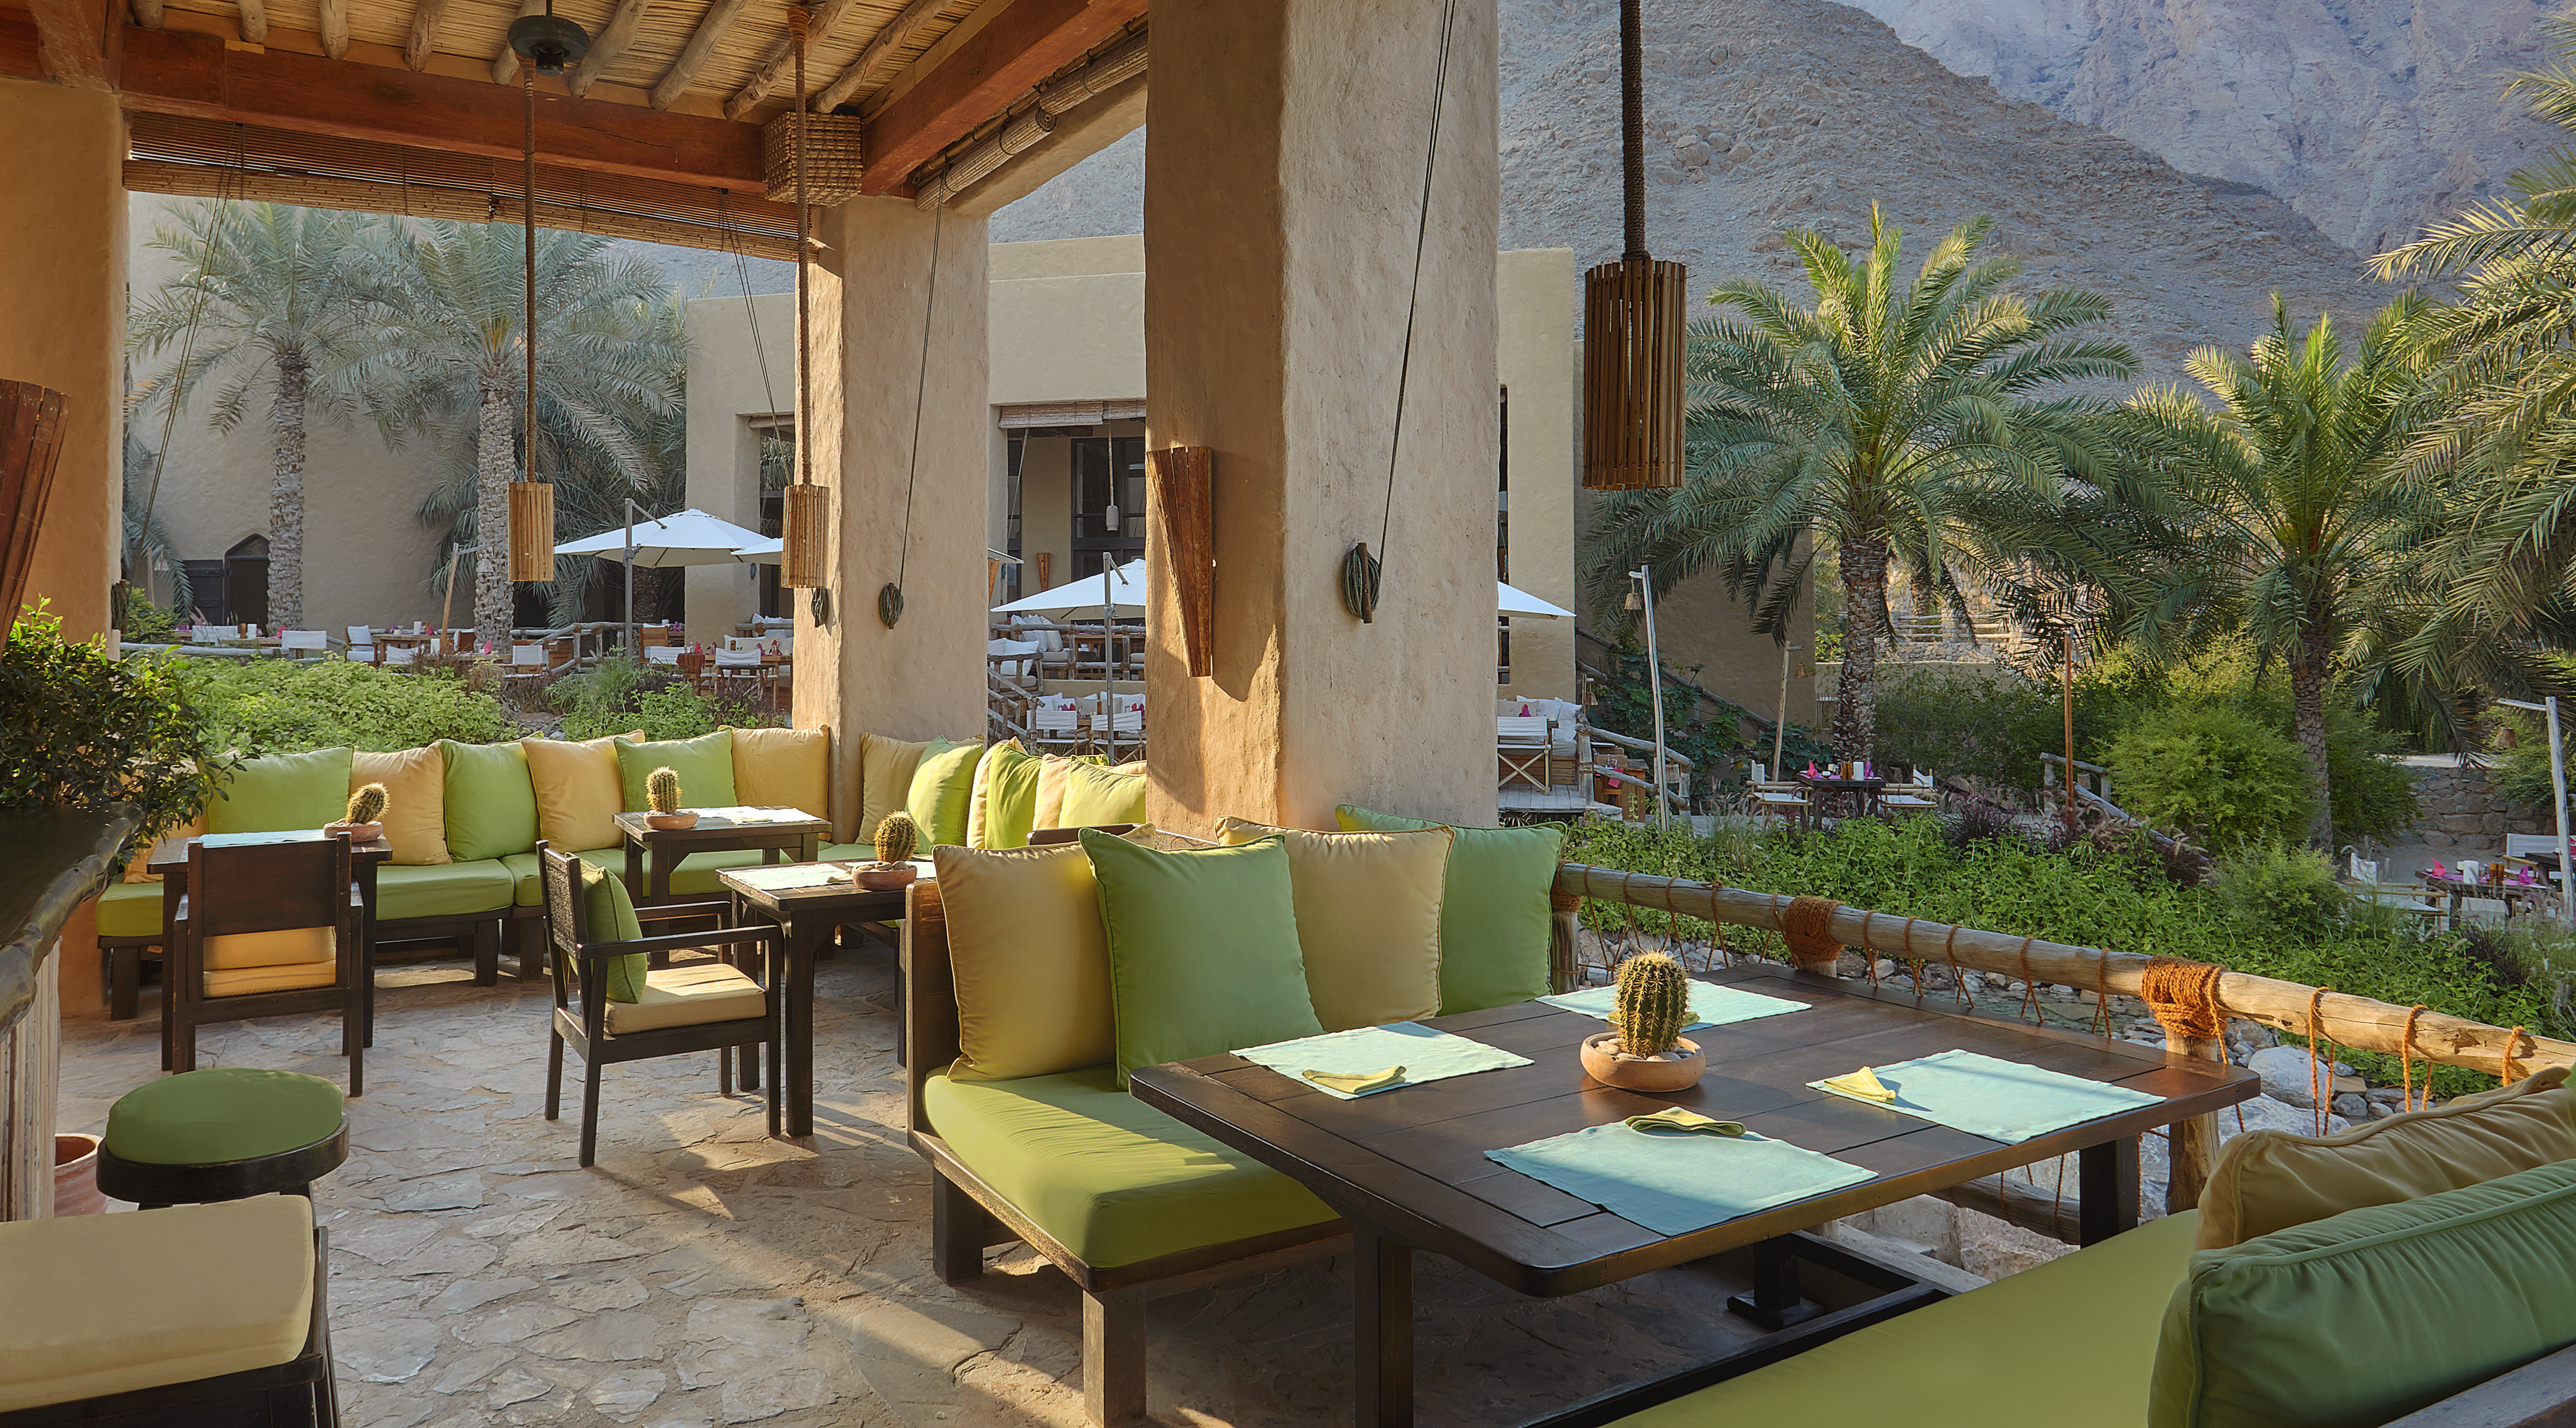 Oman tourism: Stay at Six Senses Zighy Bay in Musandam